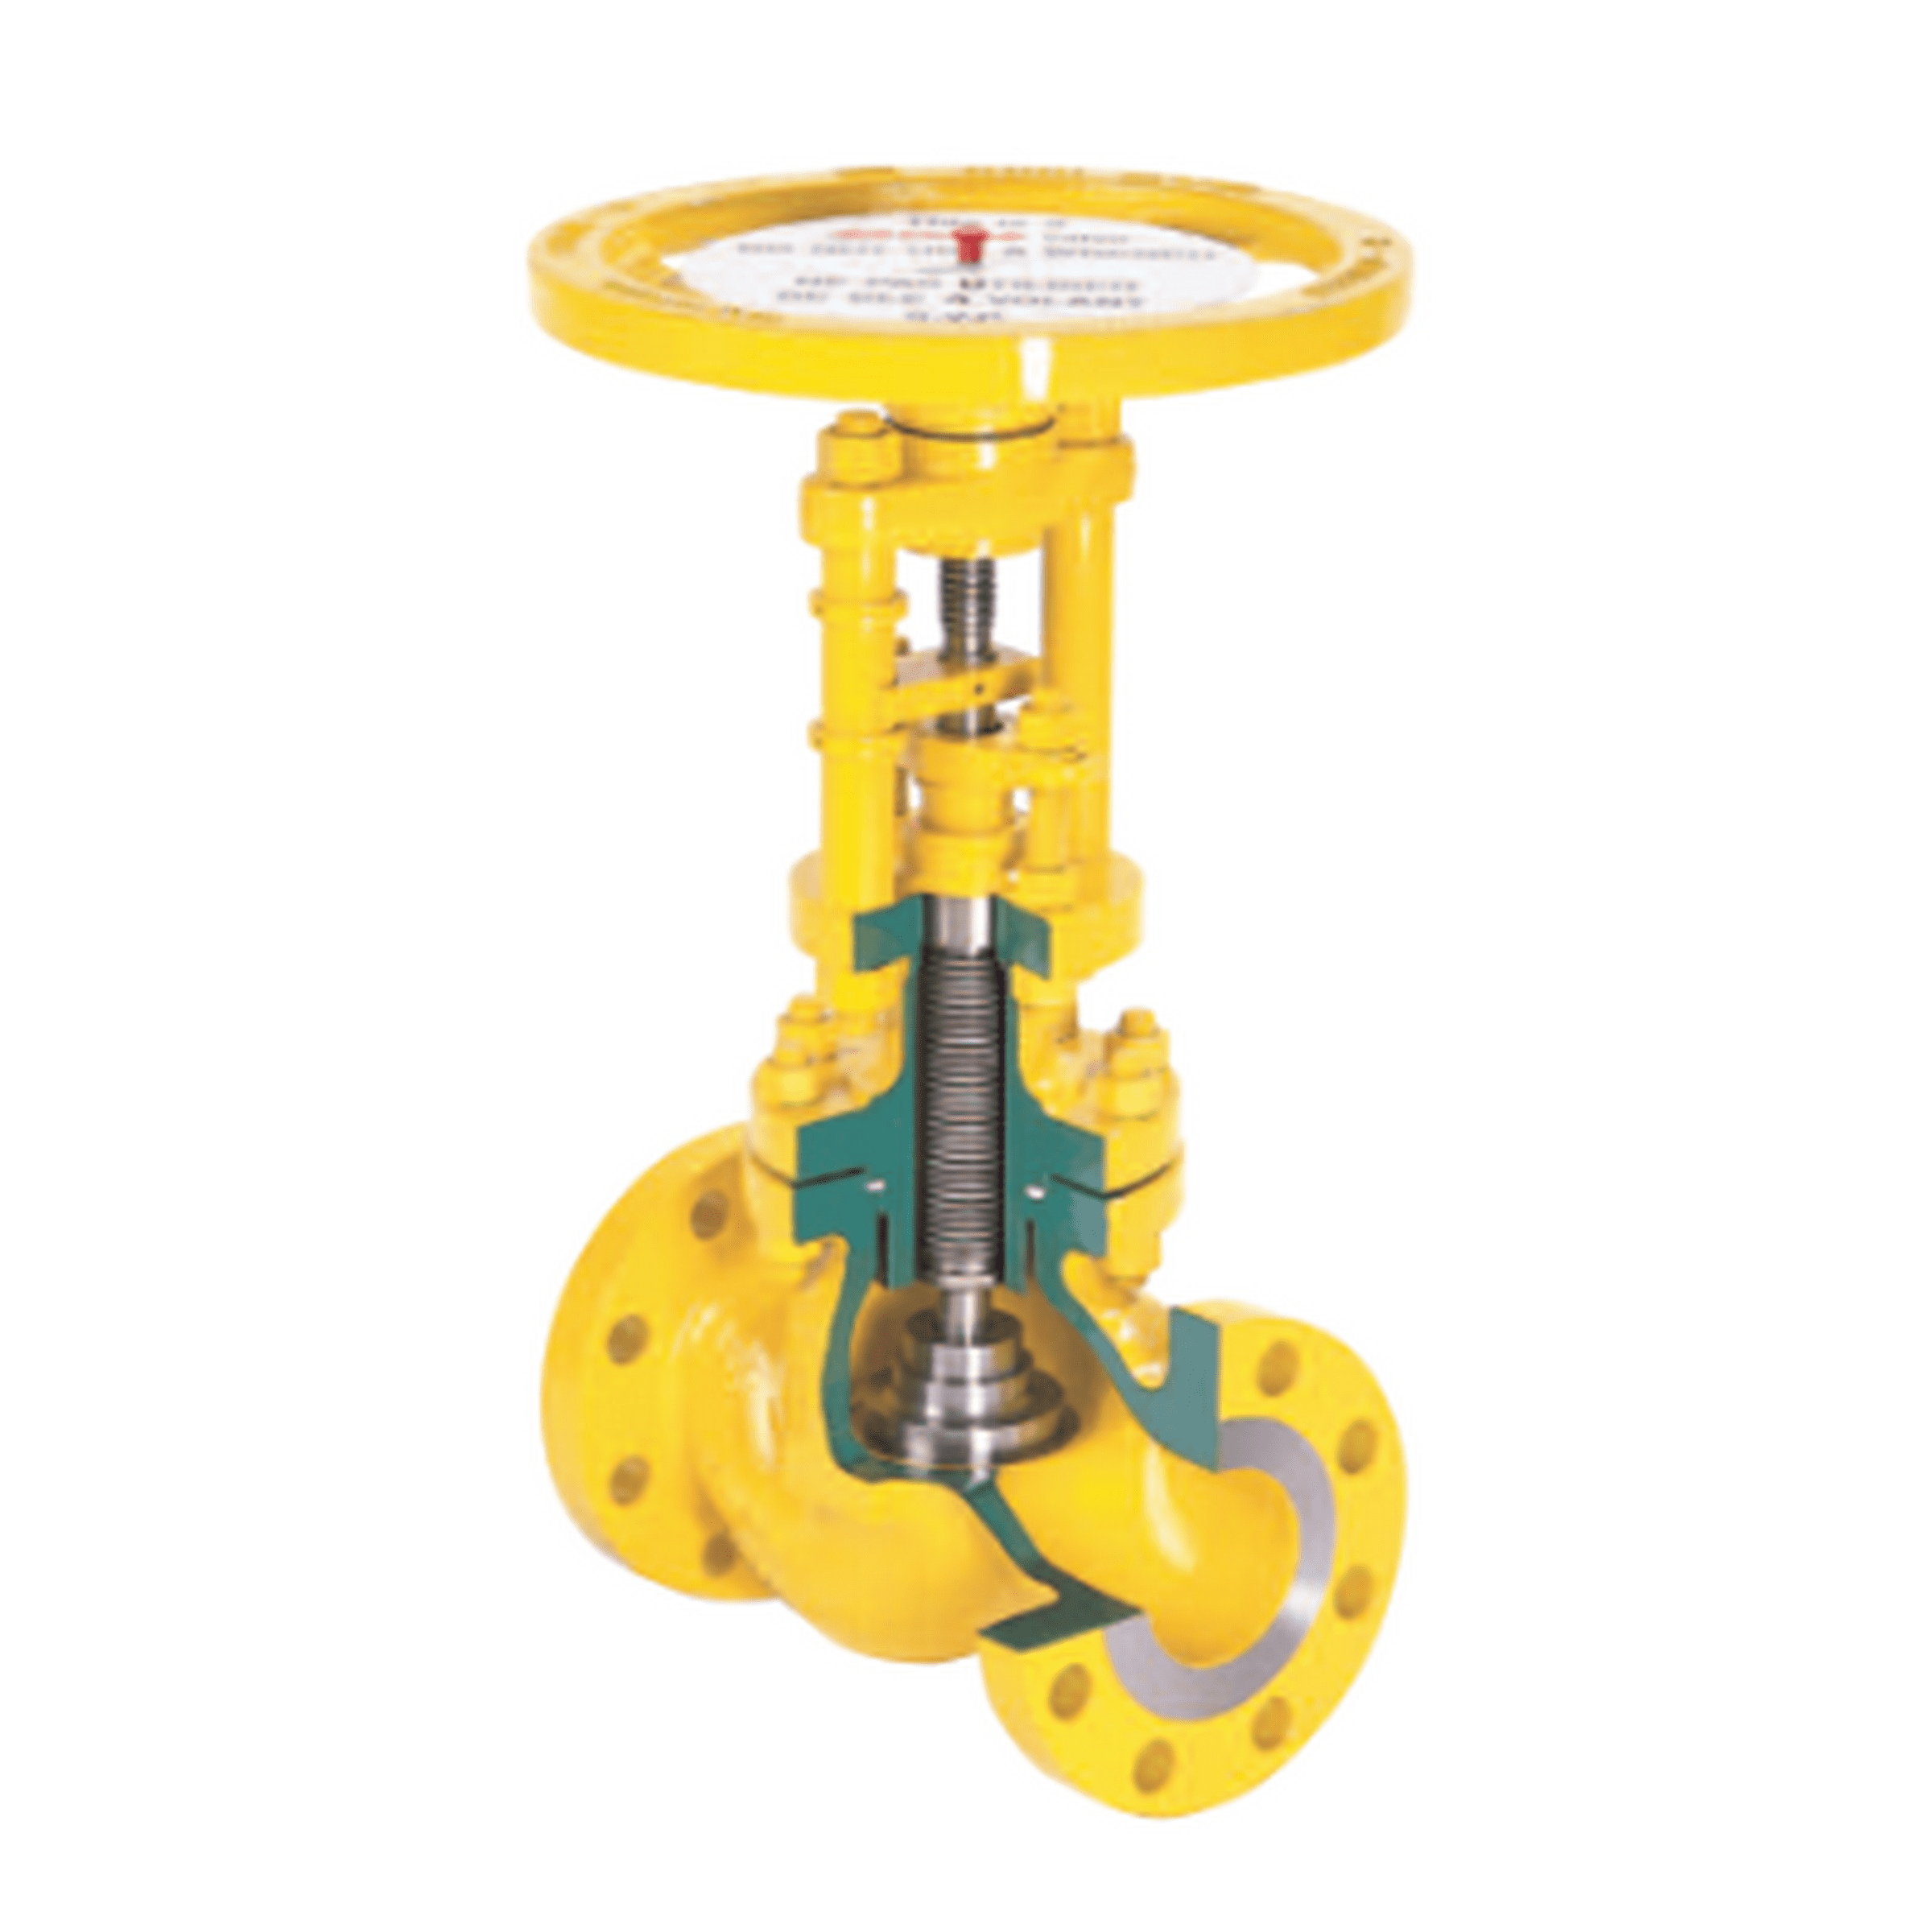 descote-bellows-sealed-globe-valve-2100b